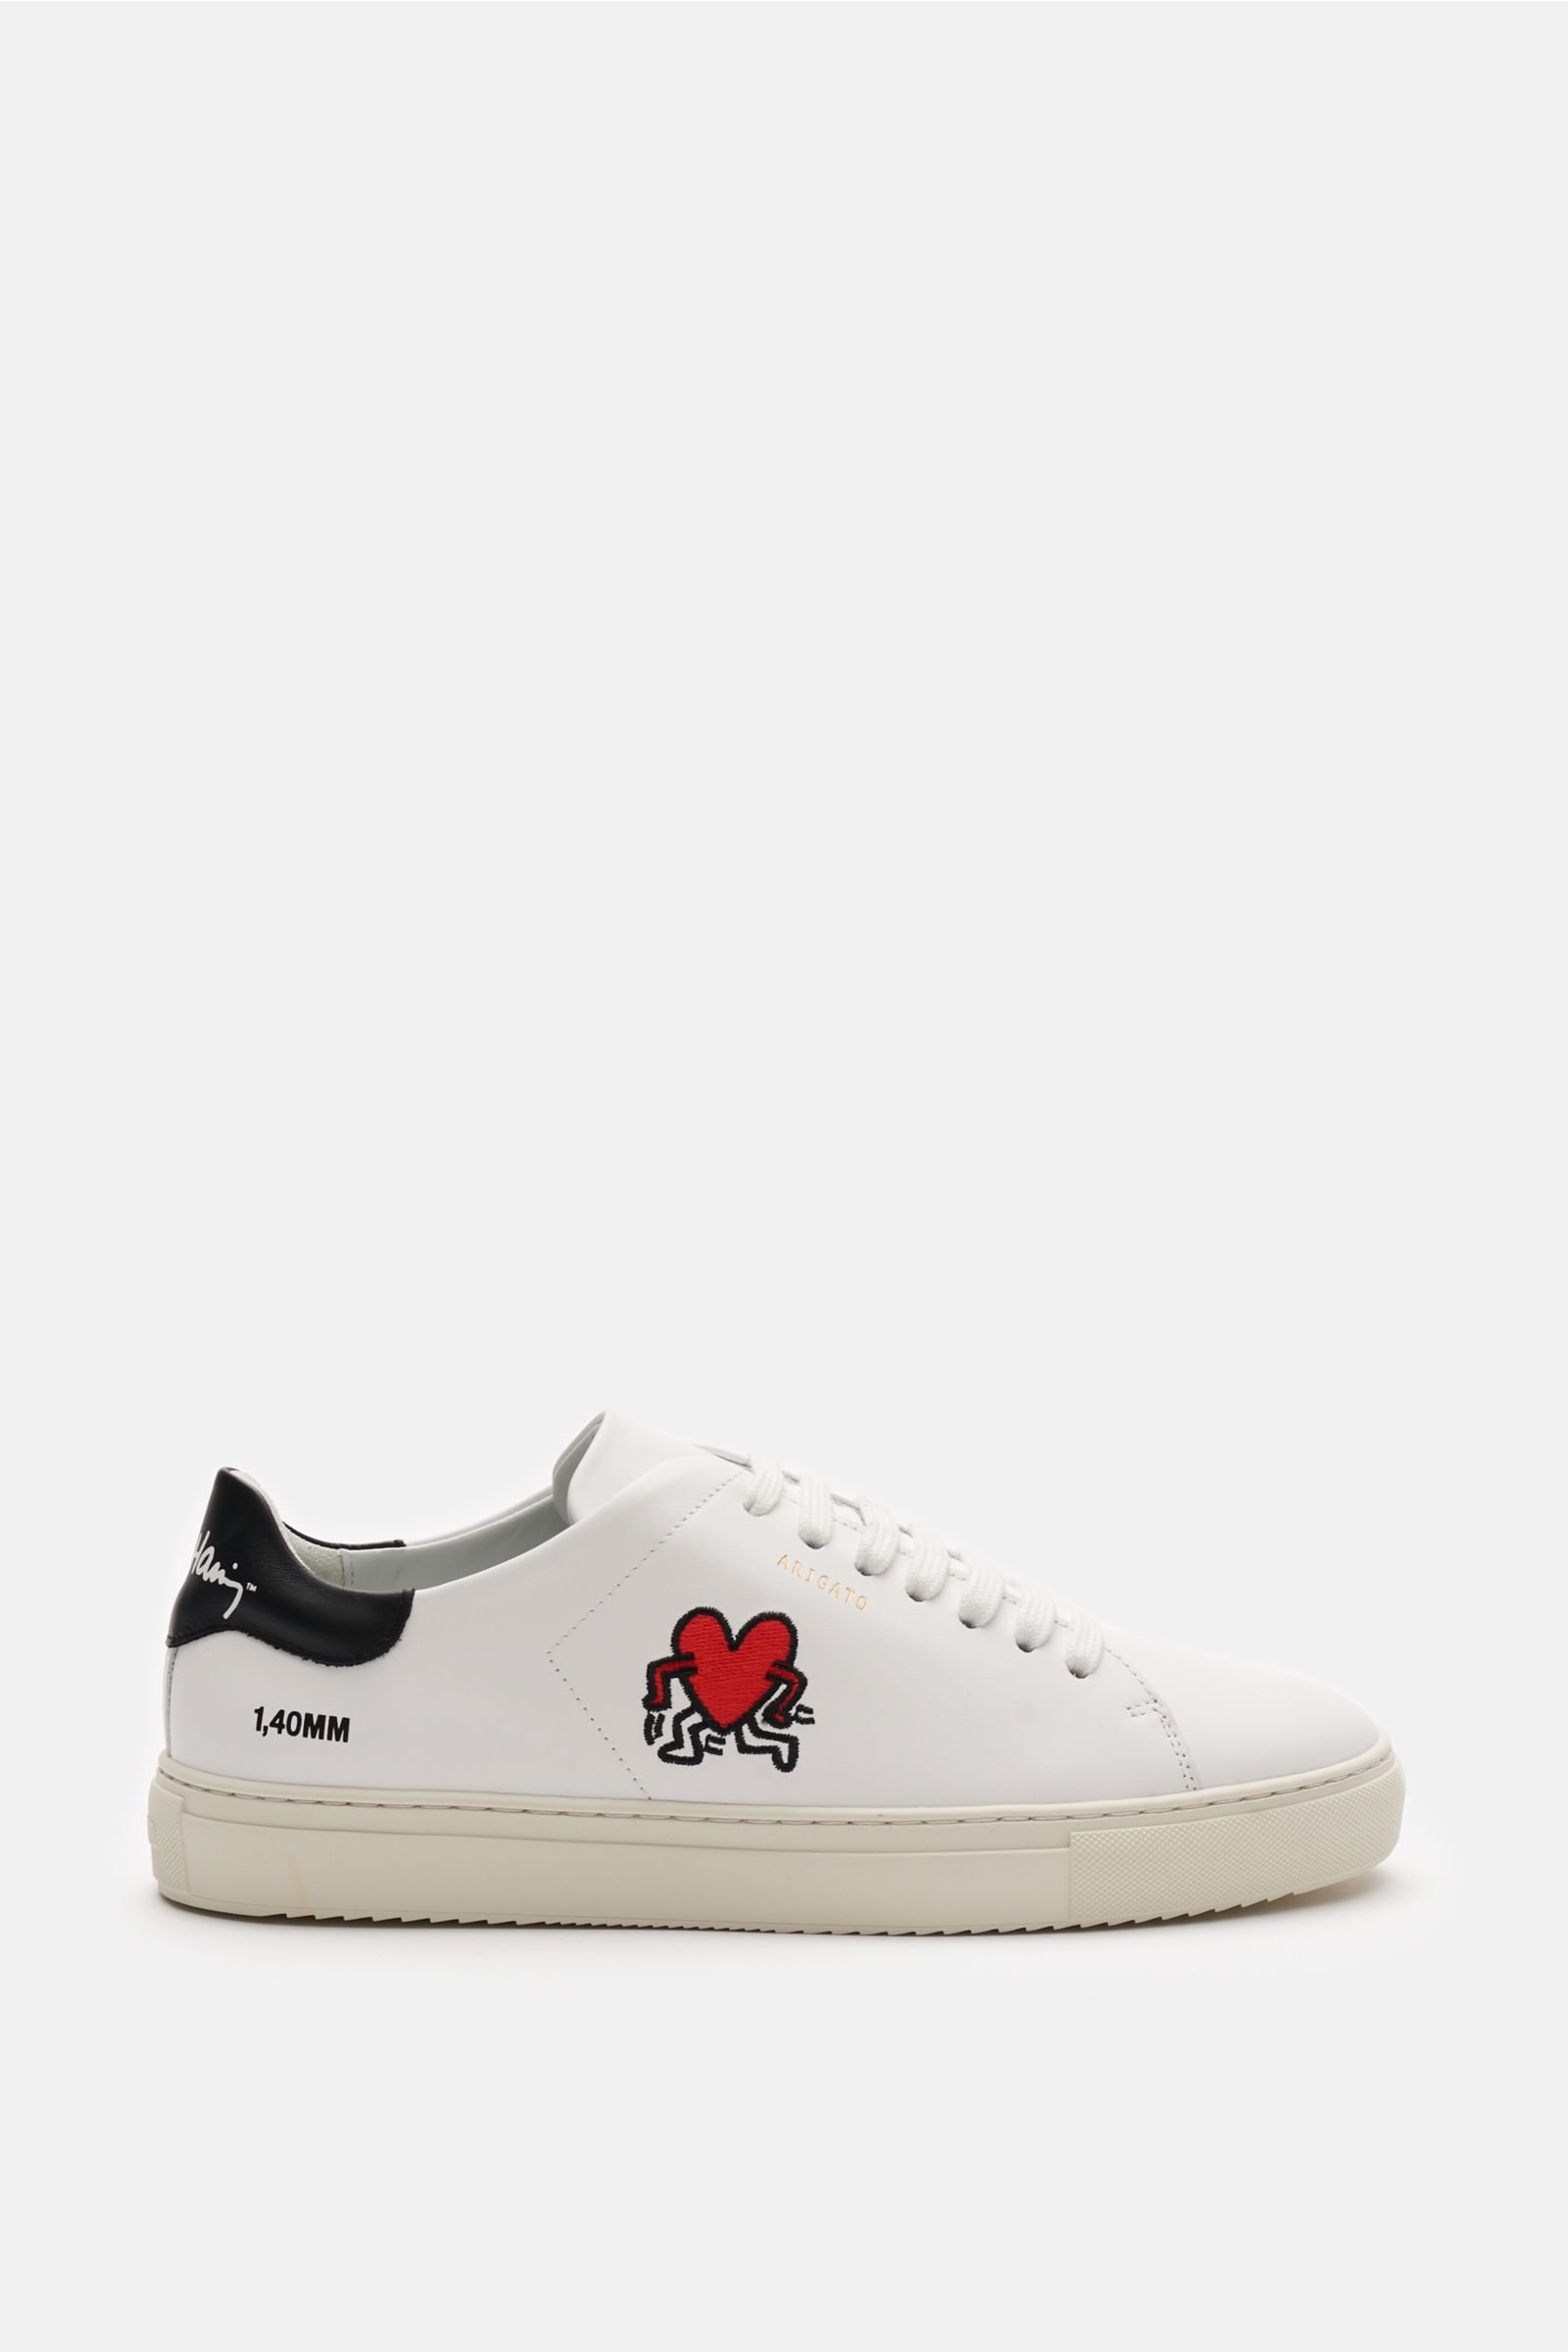 AXEL ARIGATO sneakers 'Clean 90 Keith Haring' white | BRAUN Hamburg